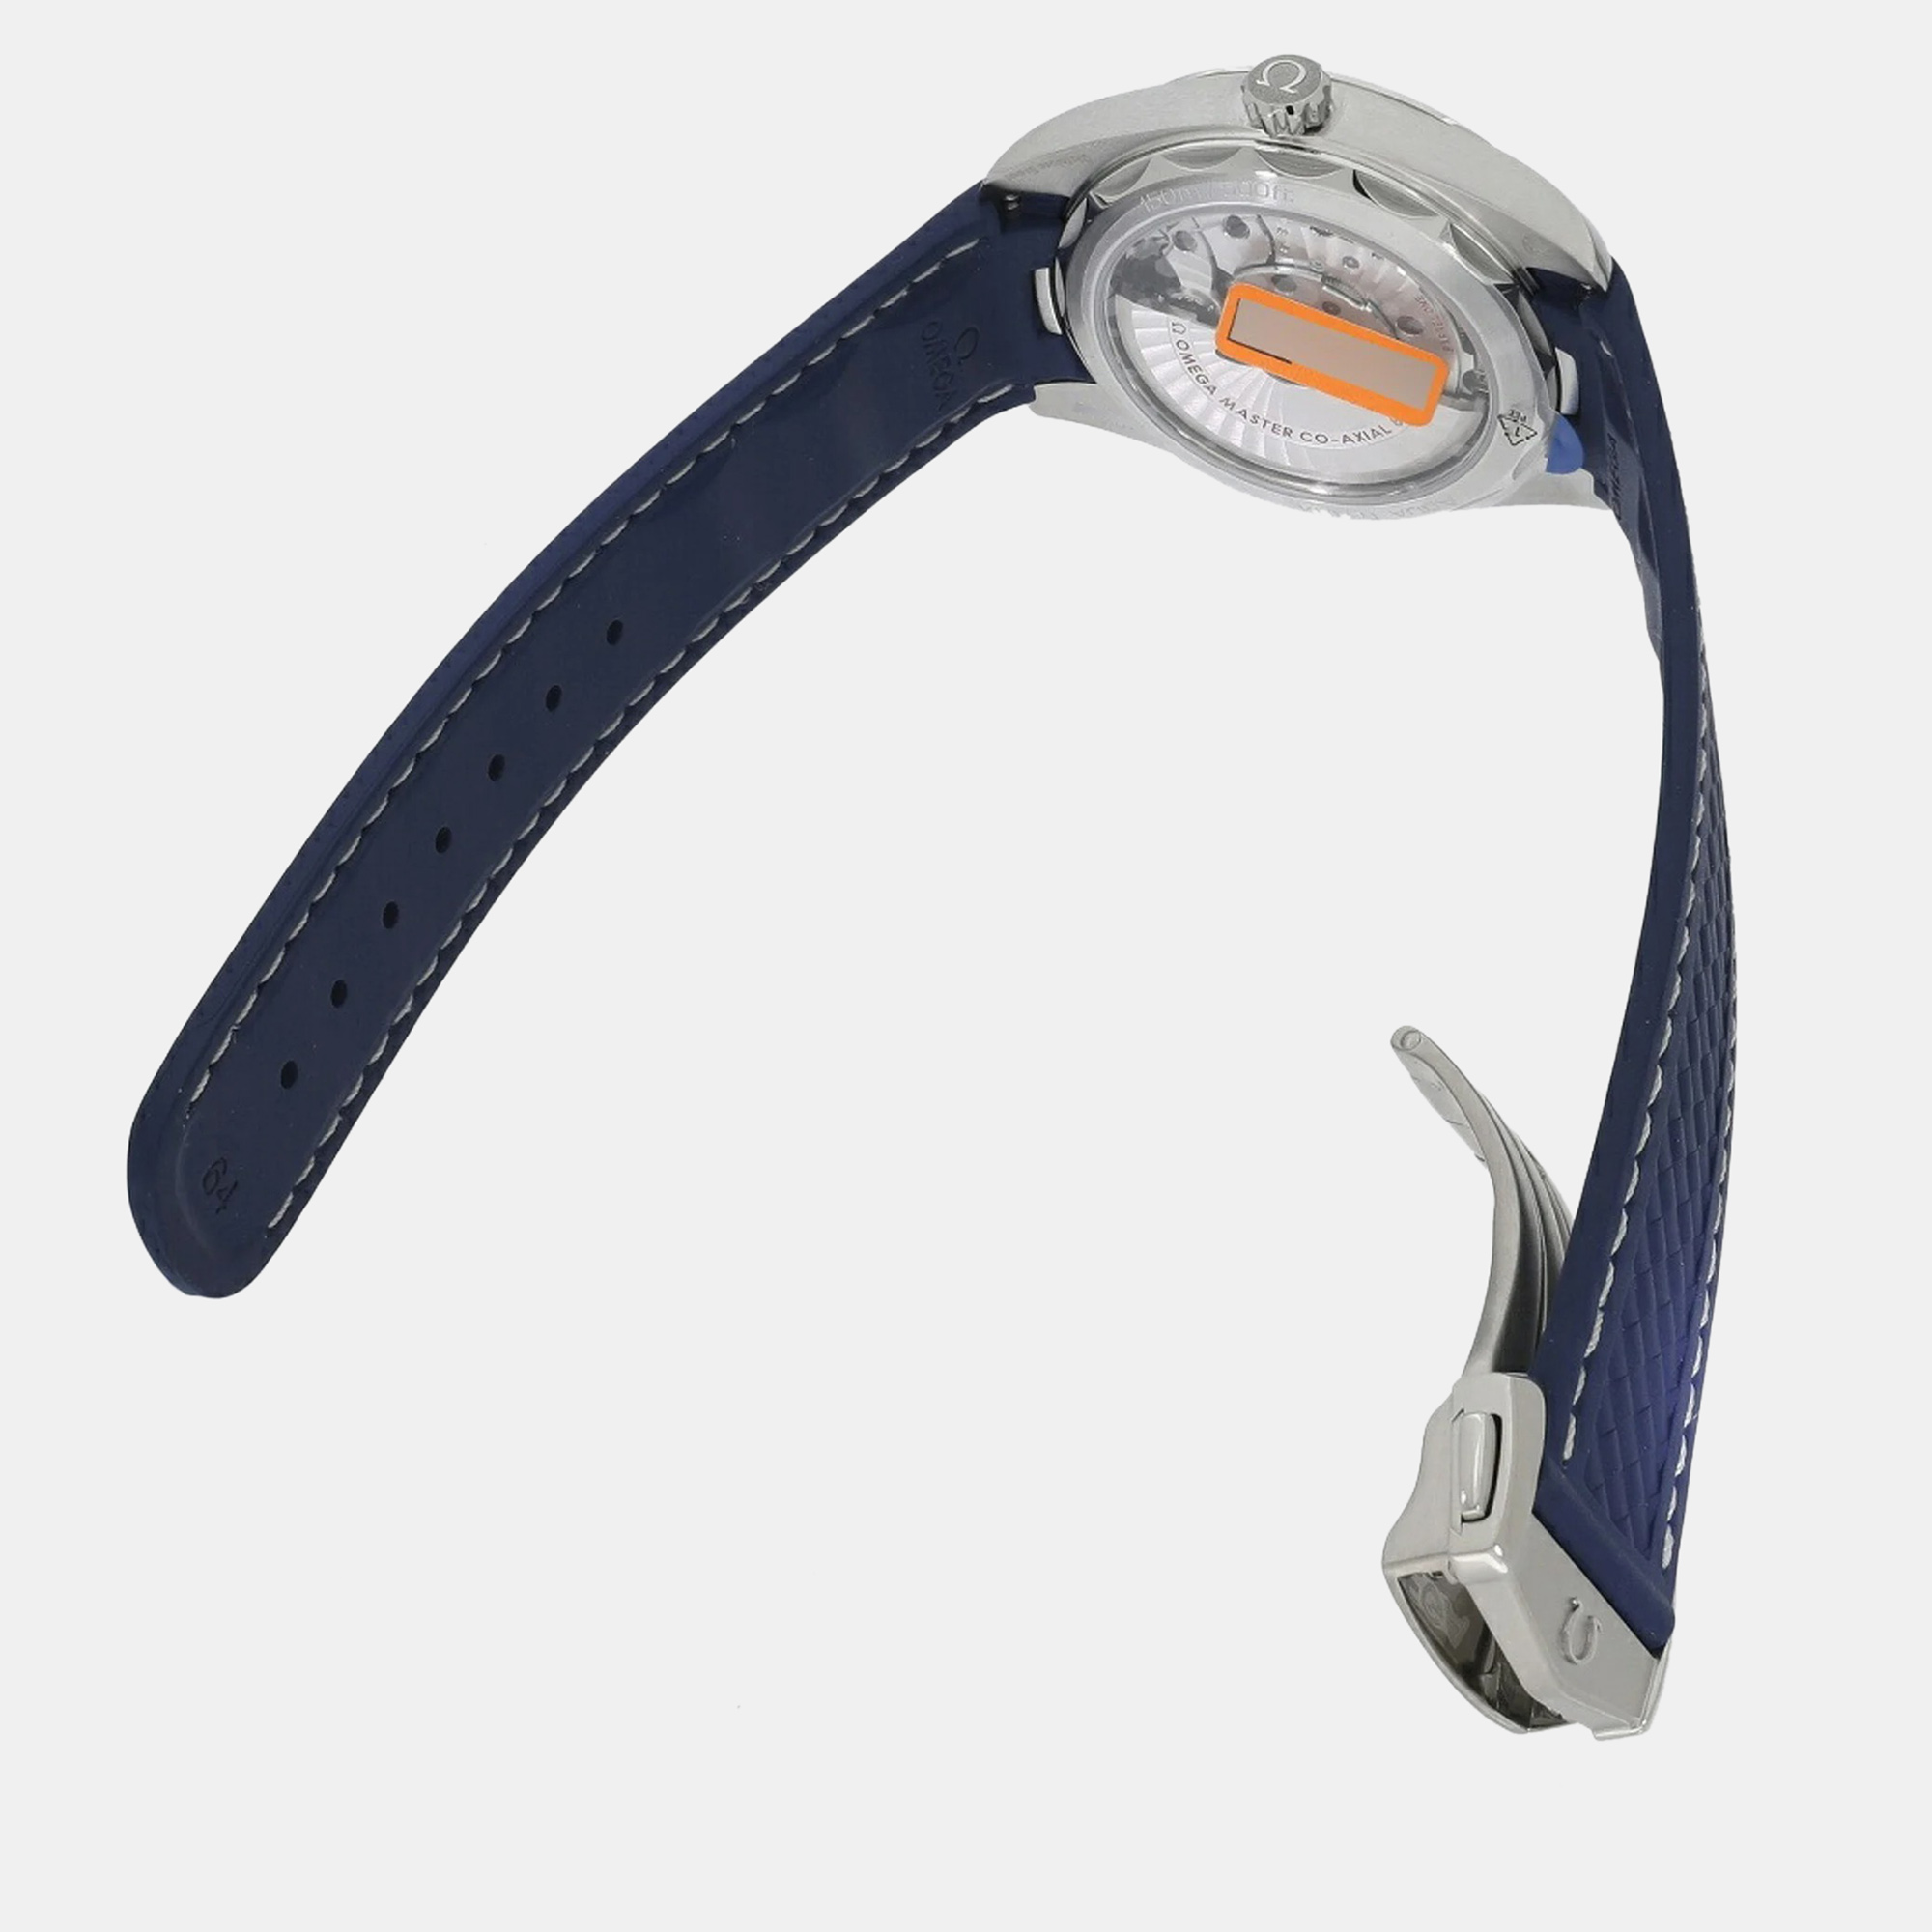 Omega Blue Stainless Steel Seamaster Aqua Terra 220.12.41.21.03.001 Automatic Men's Wristwatch 41 Mm